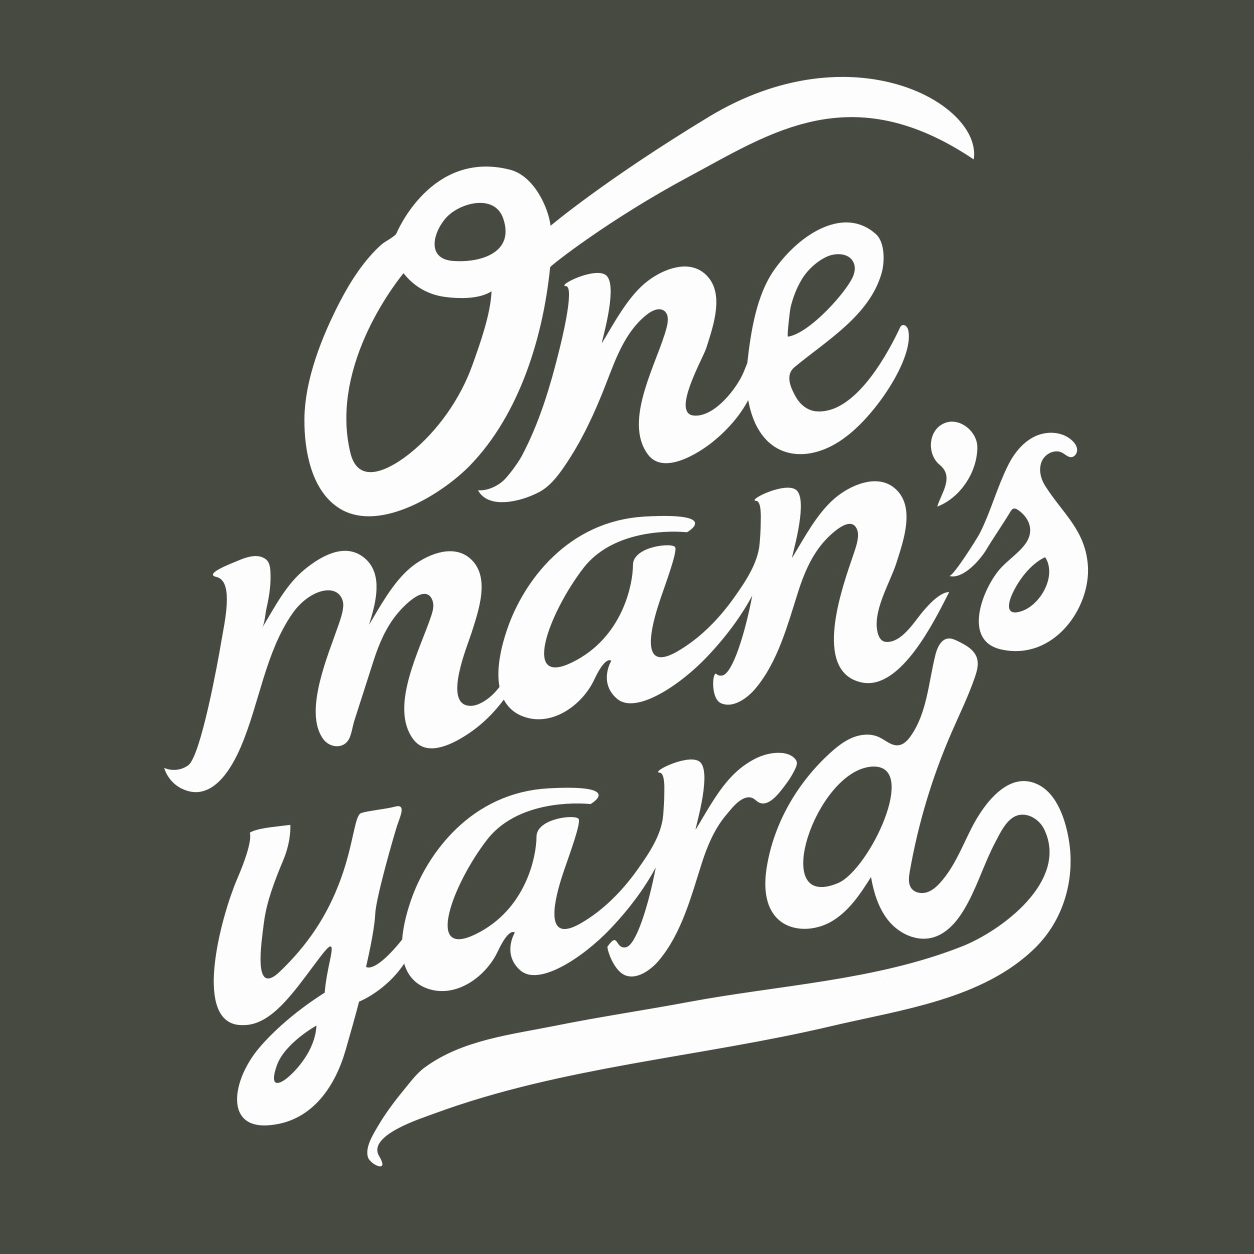 One Man's Yard